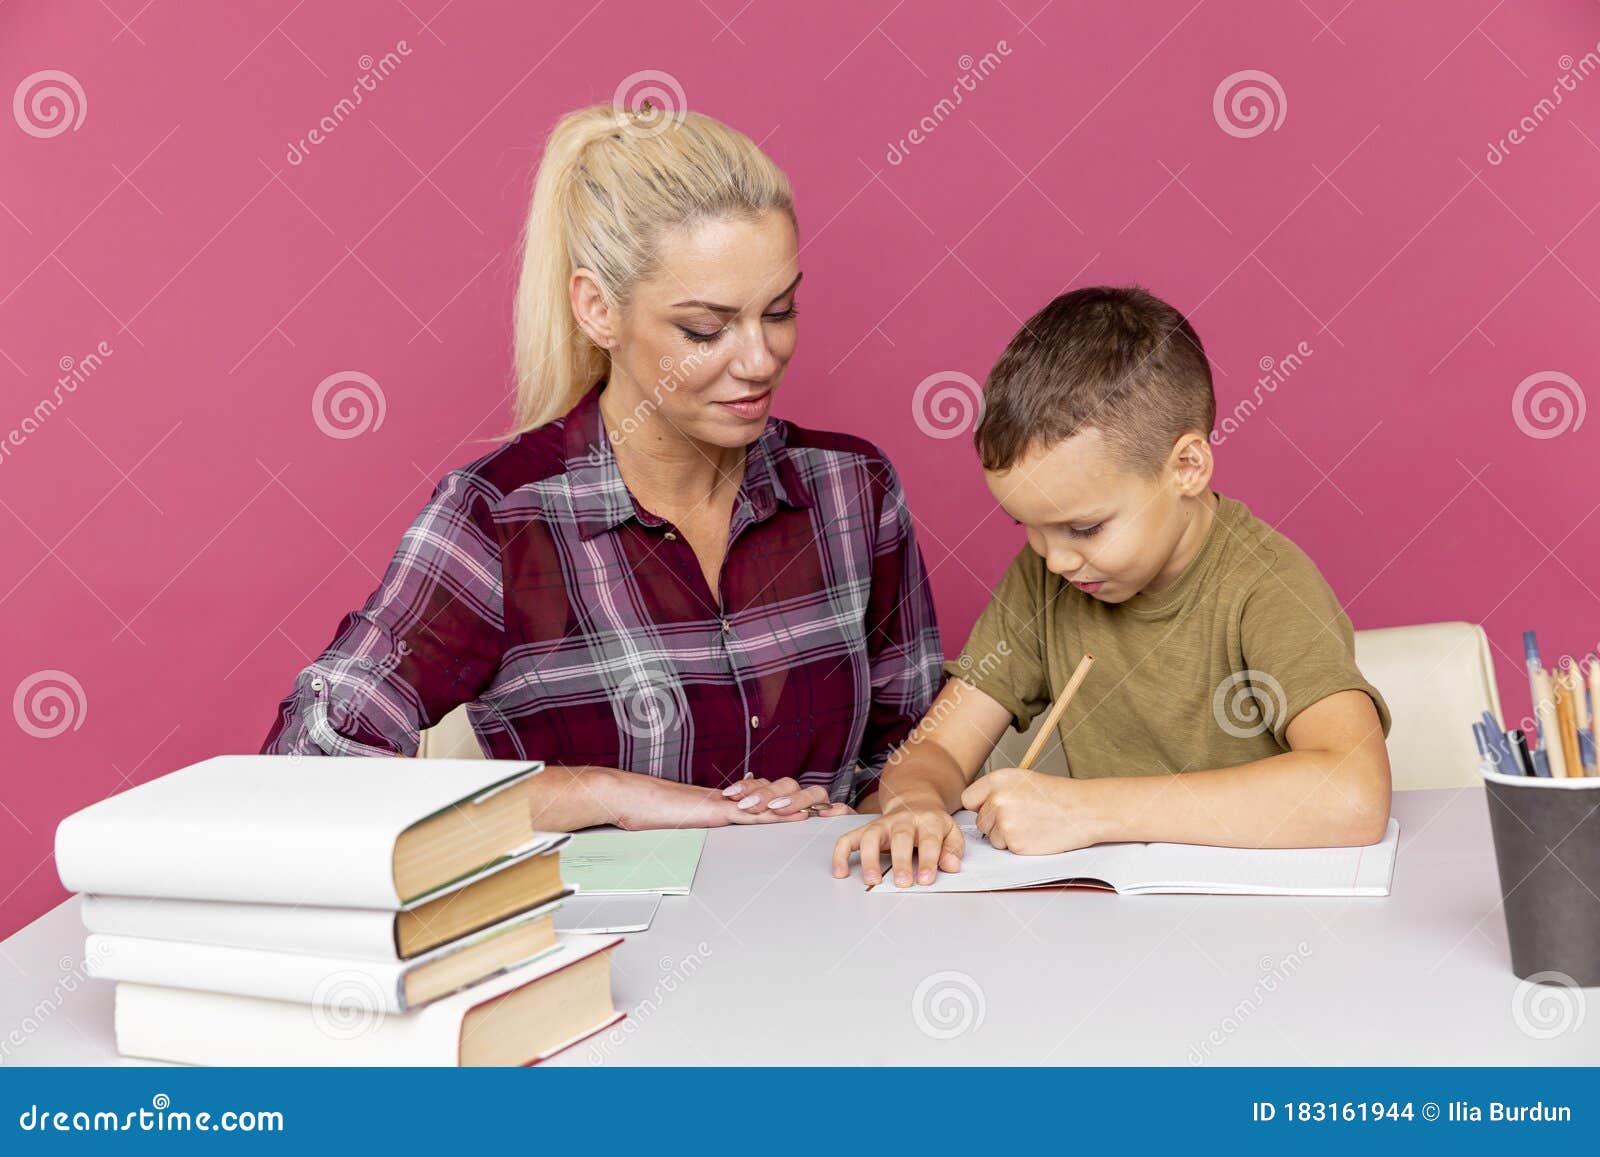 should tutors give homework